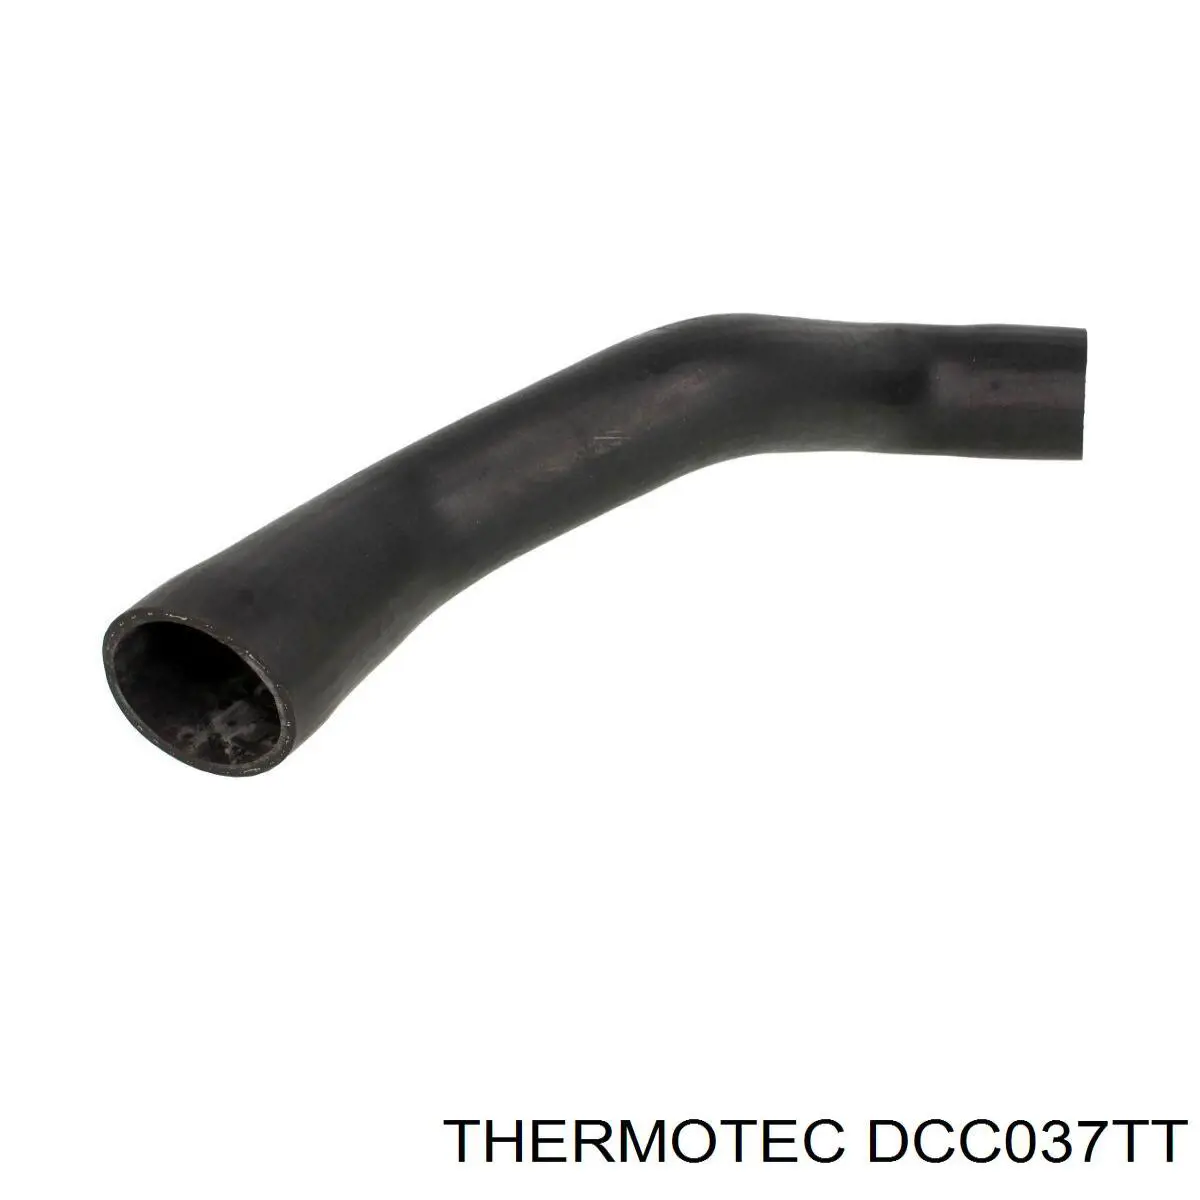 DCC037TT Thermotec mangueira (cano derivado esquerda de intercooler)